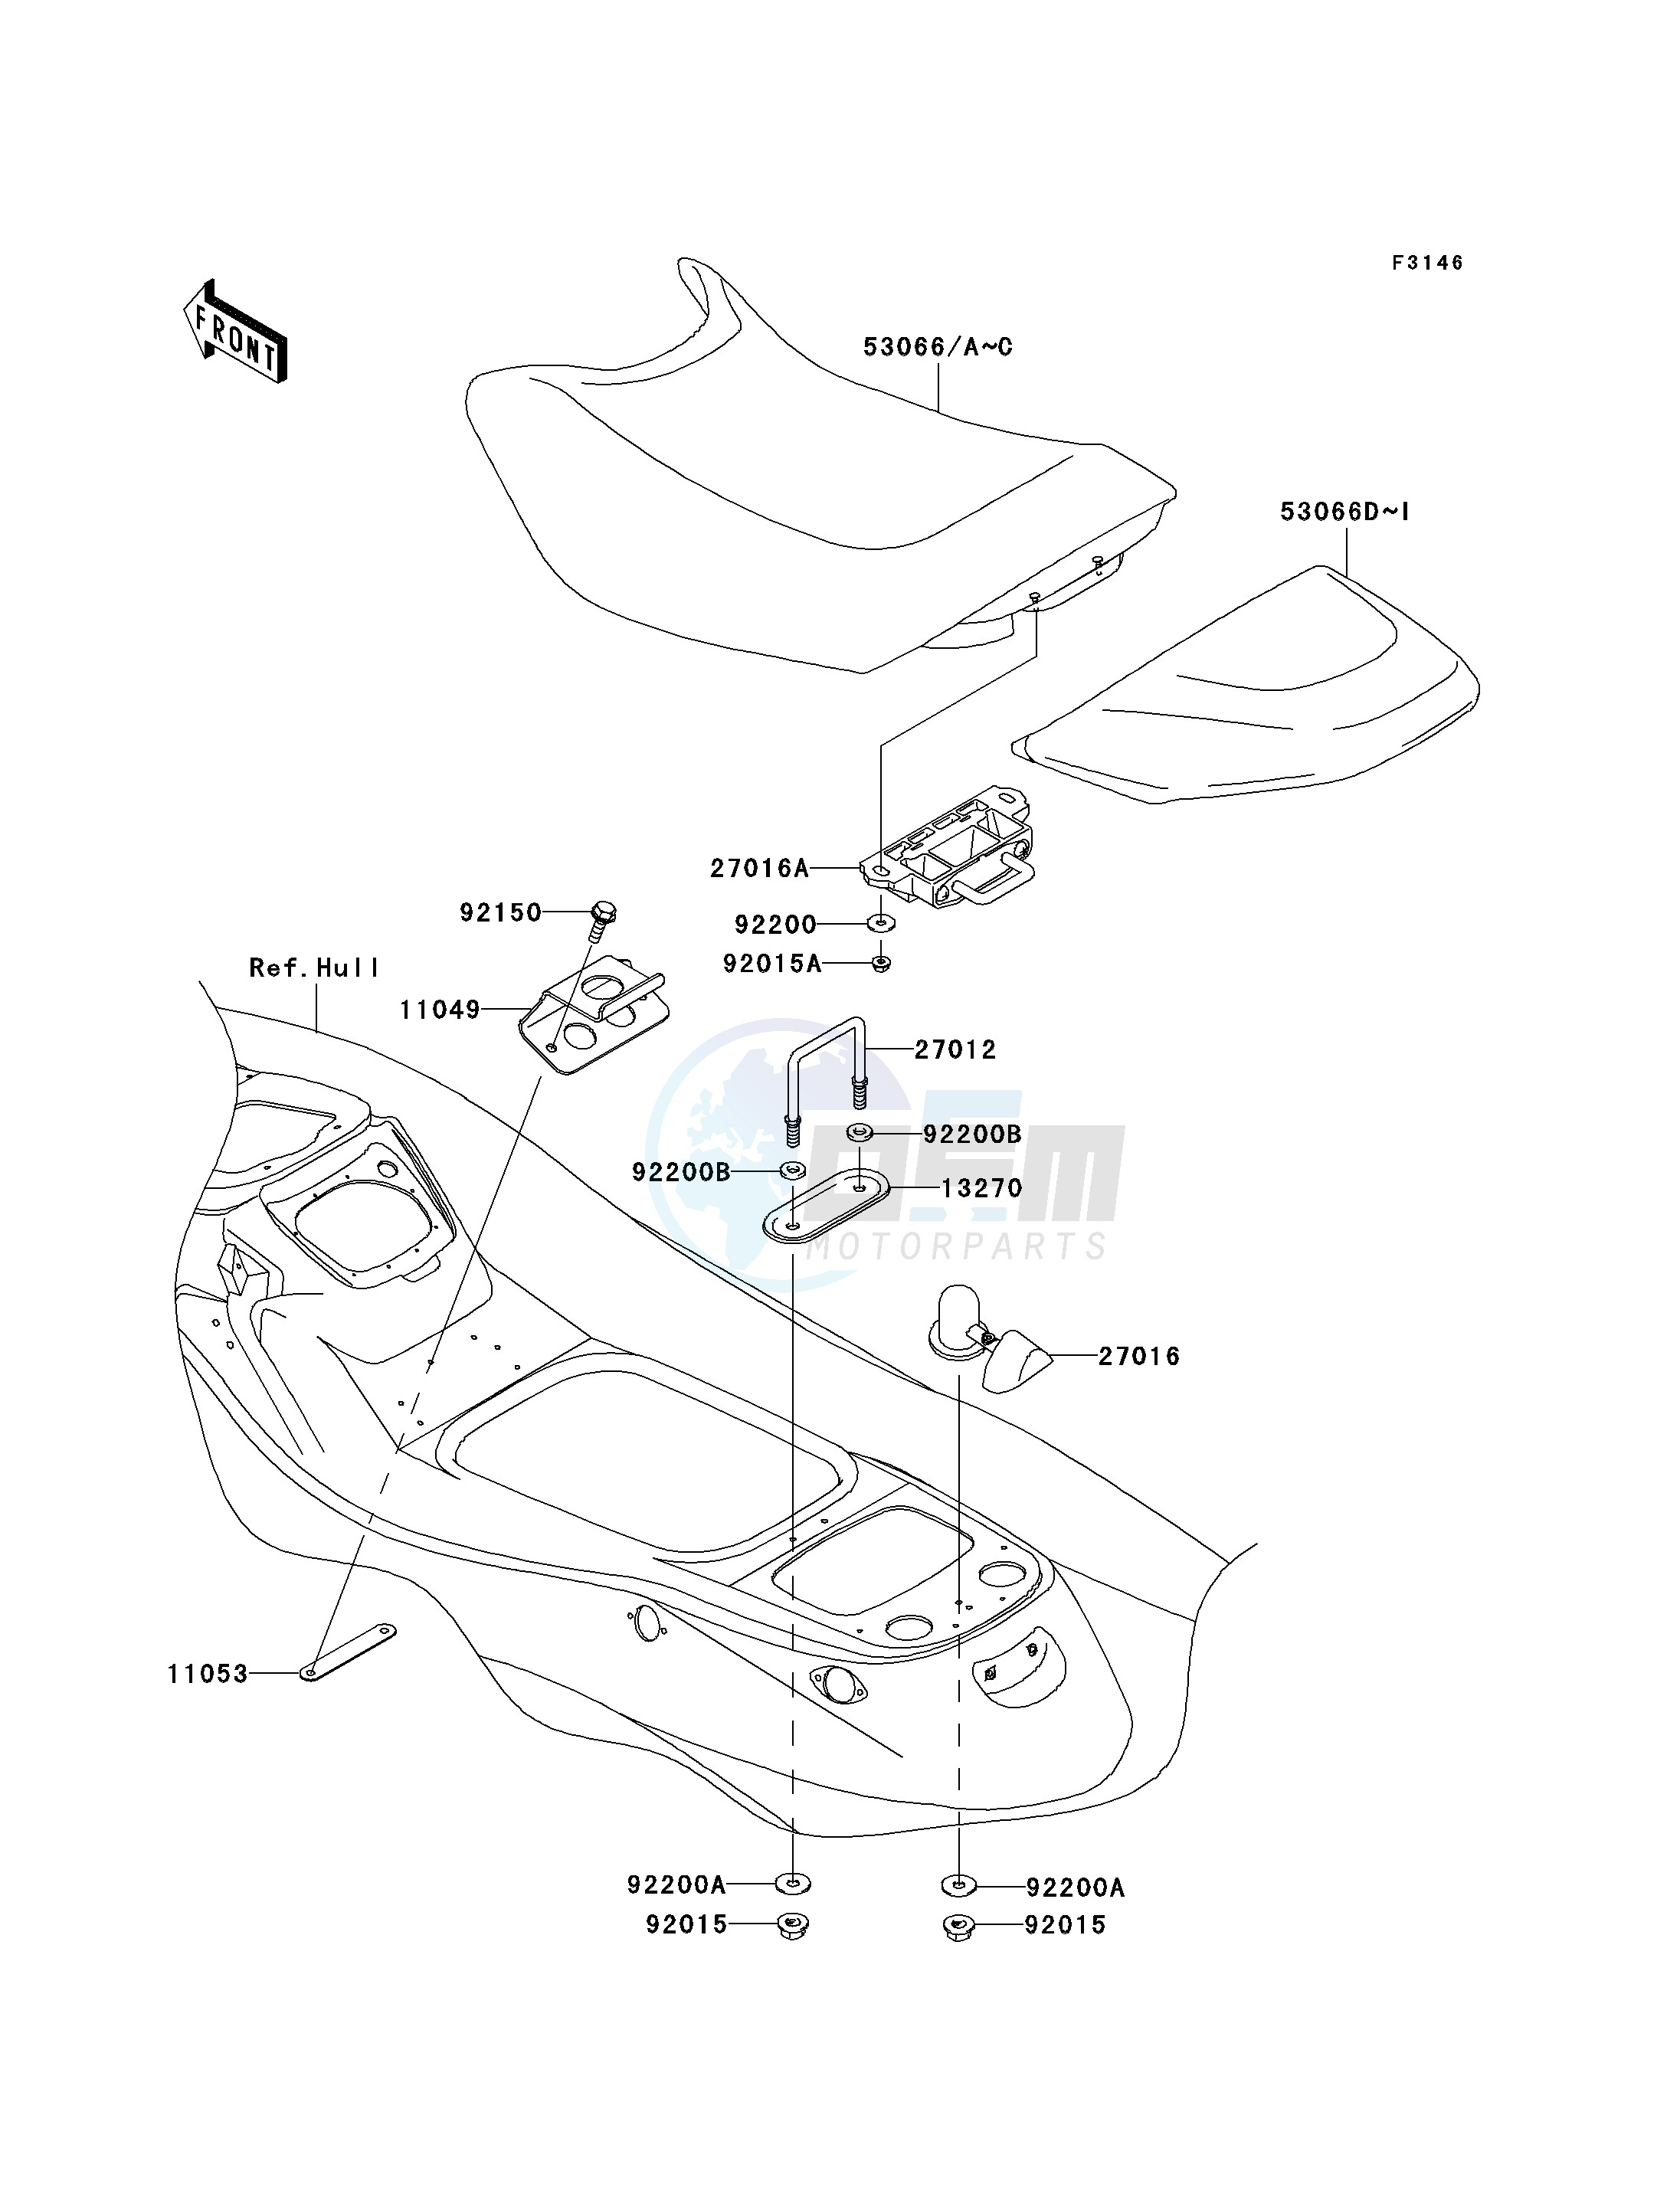 SEAT blueprint